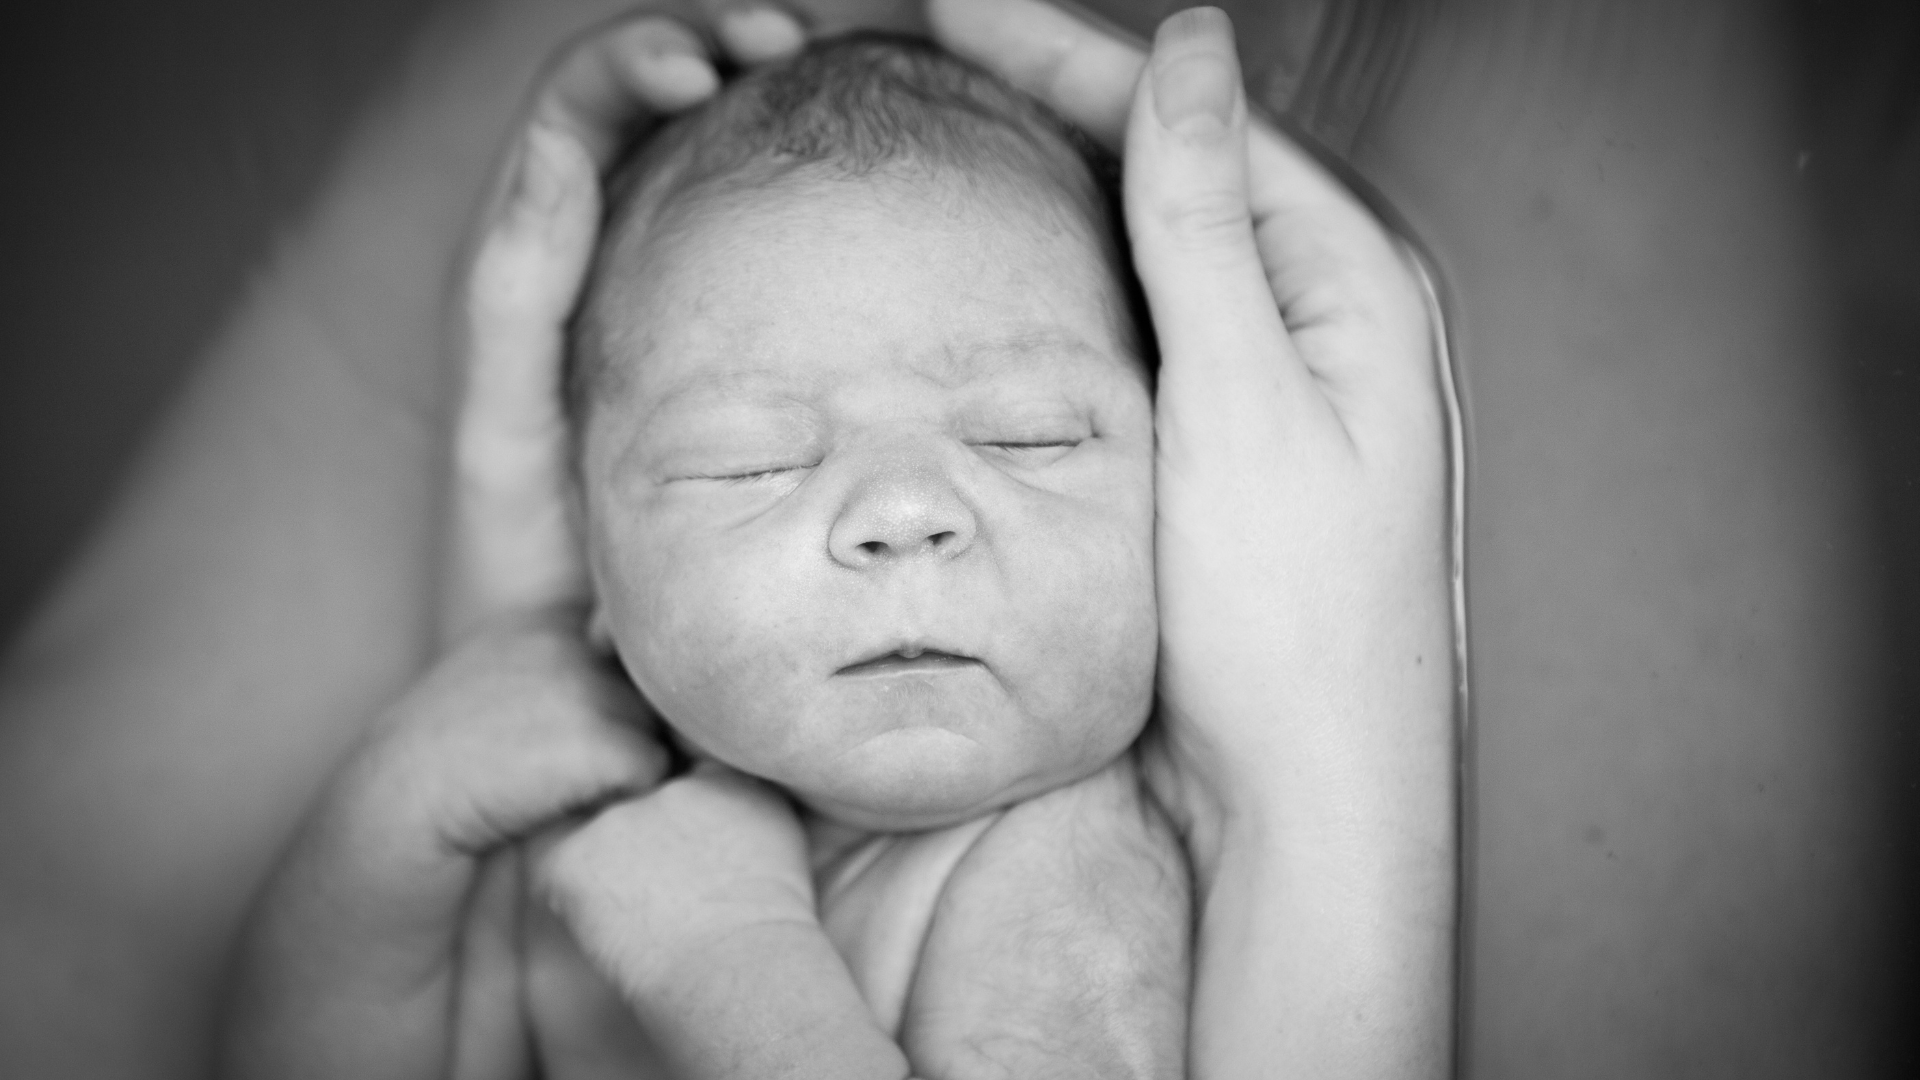 A sleeping newborn infant is cradled in hands.